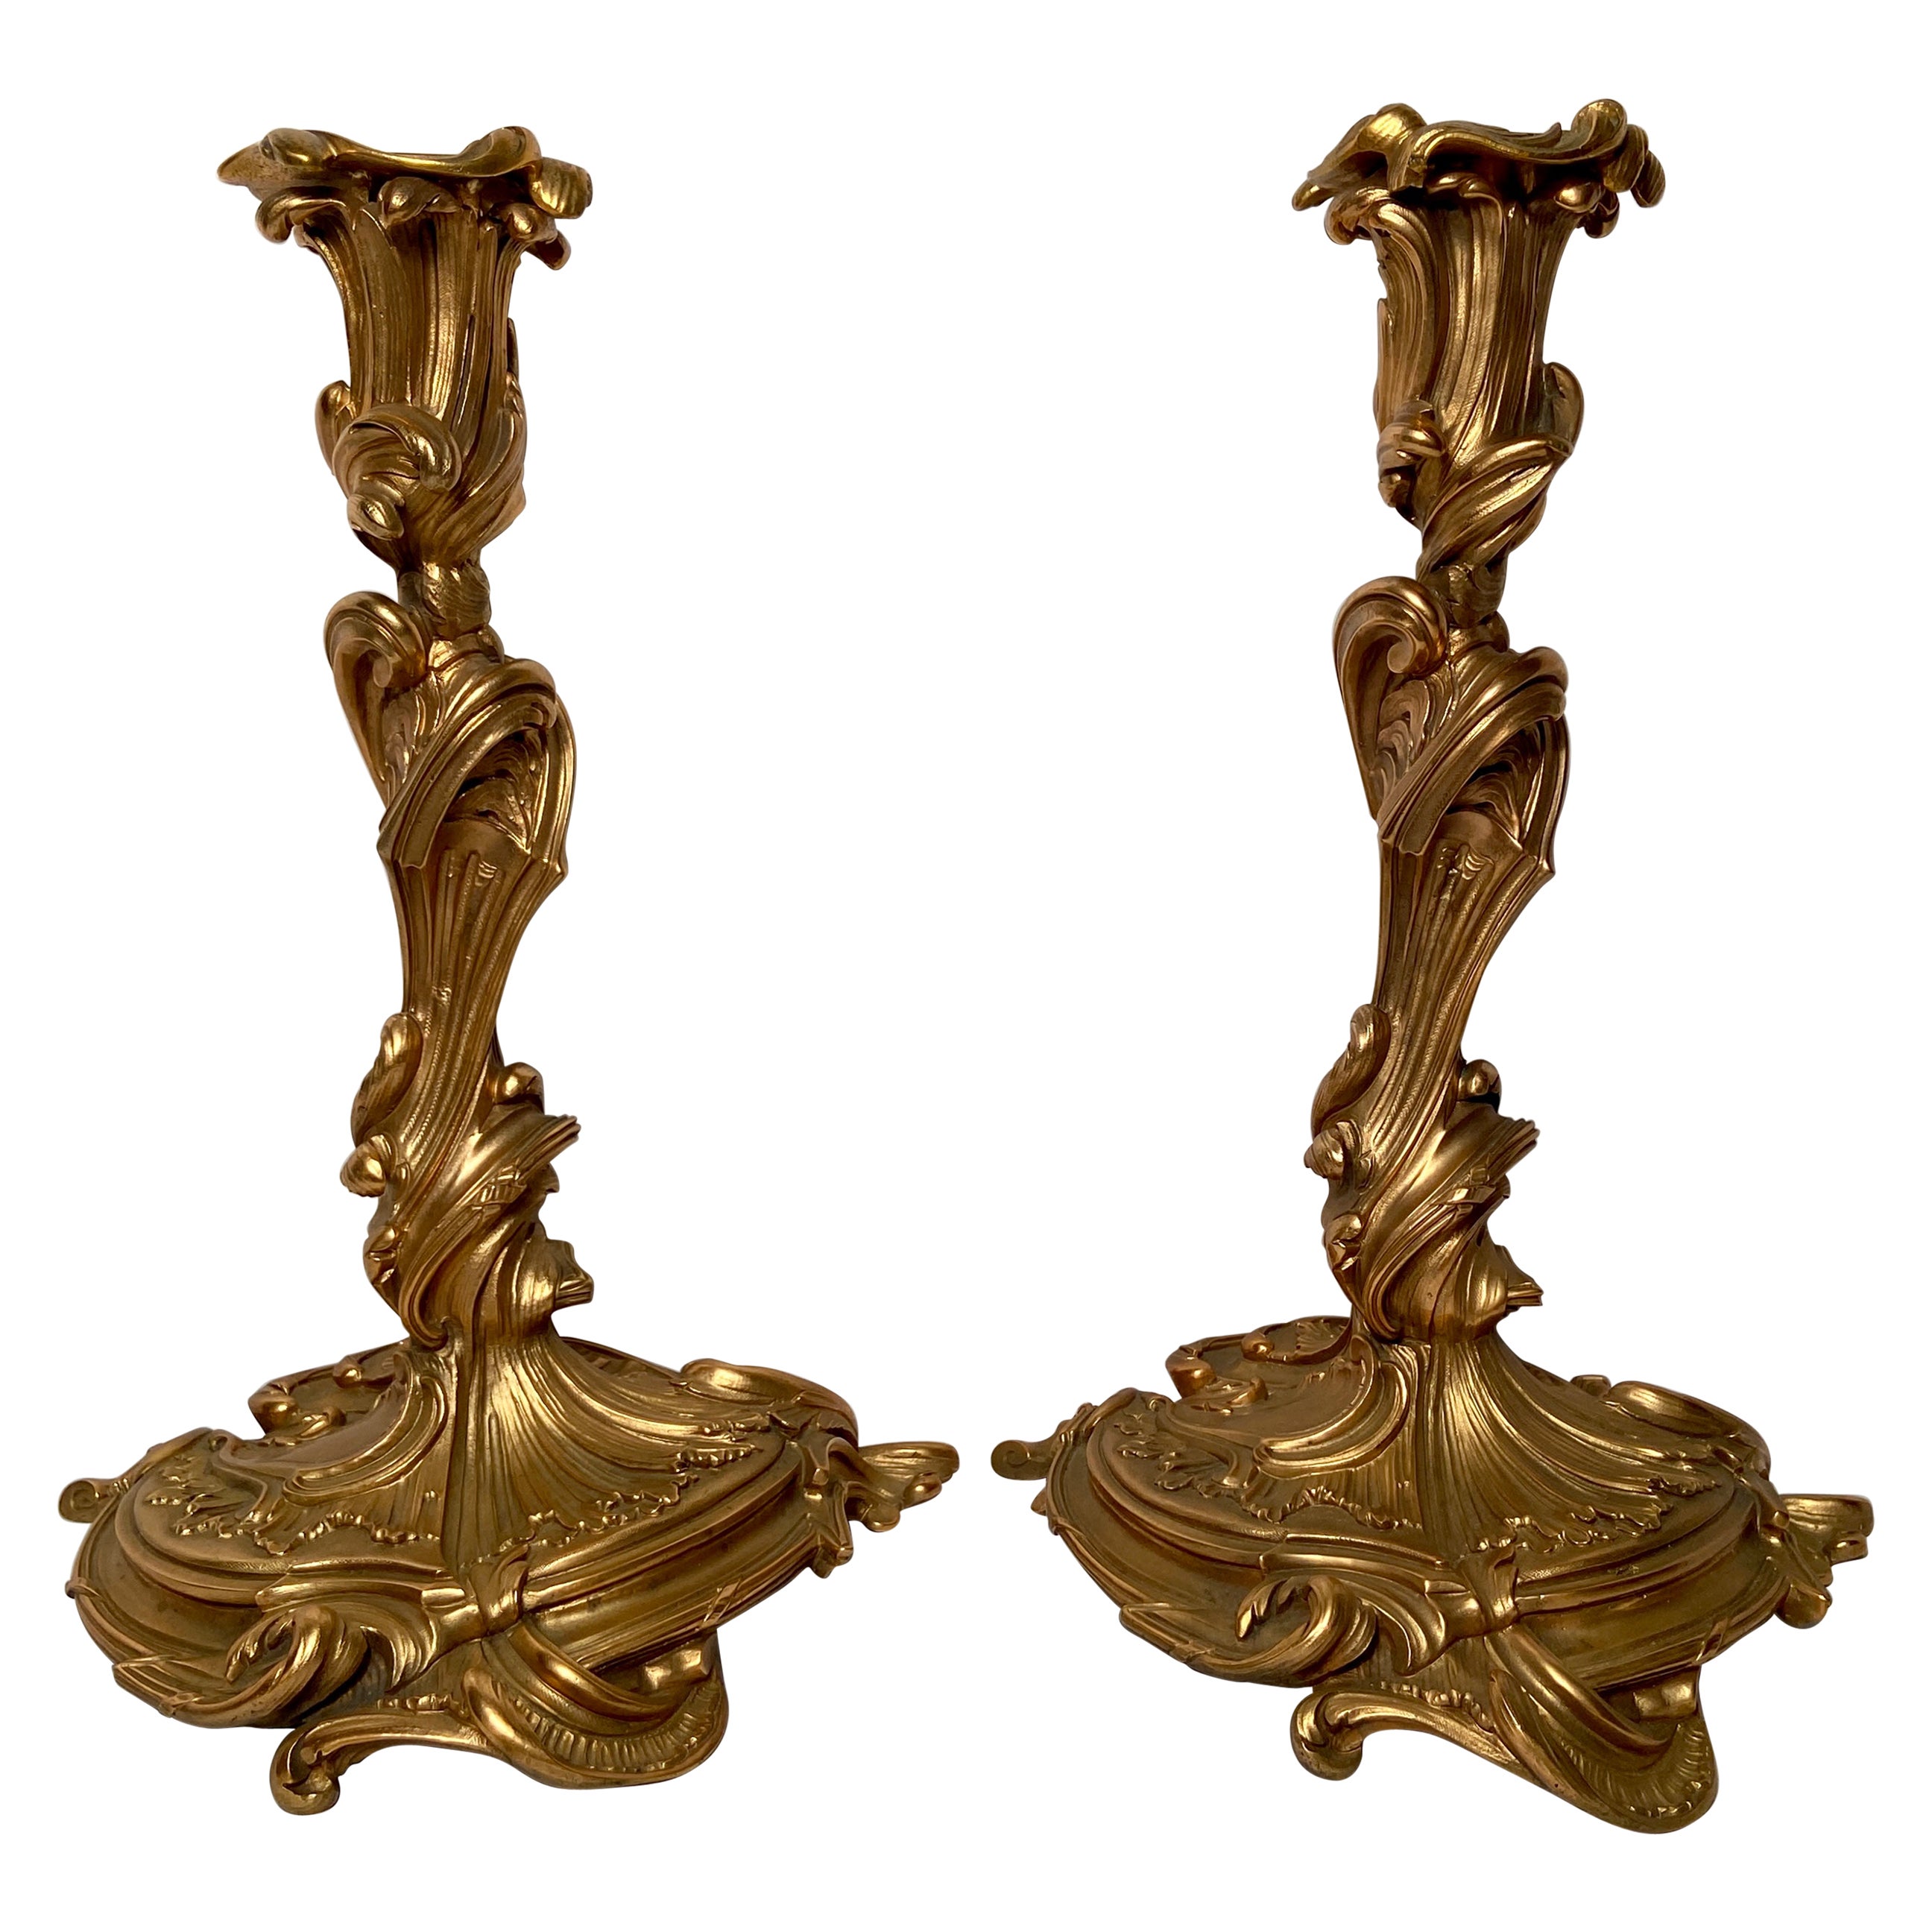 Pair Antique French Ormolu Candlesticks, Circa 1870-1880